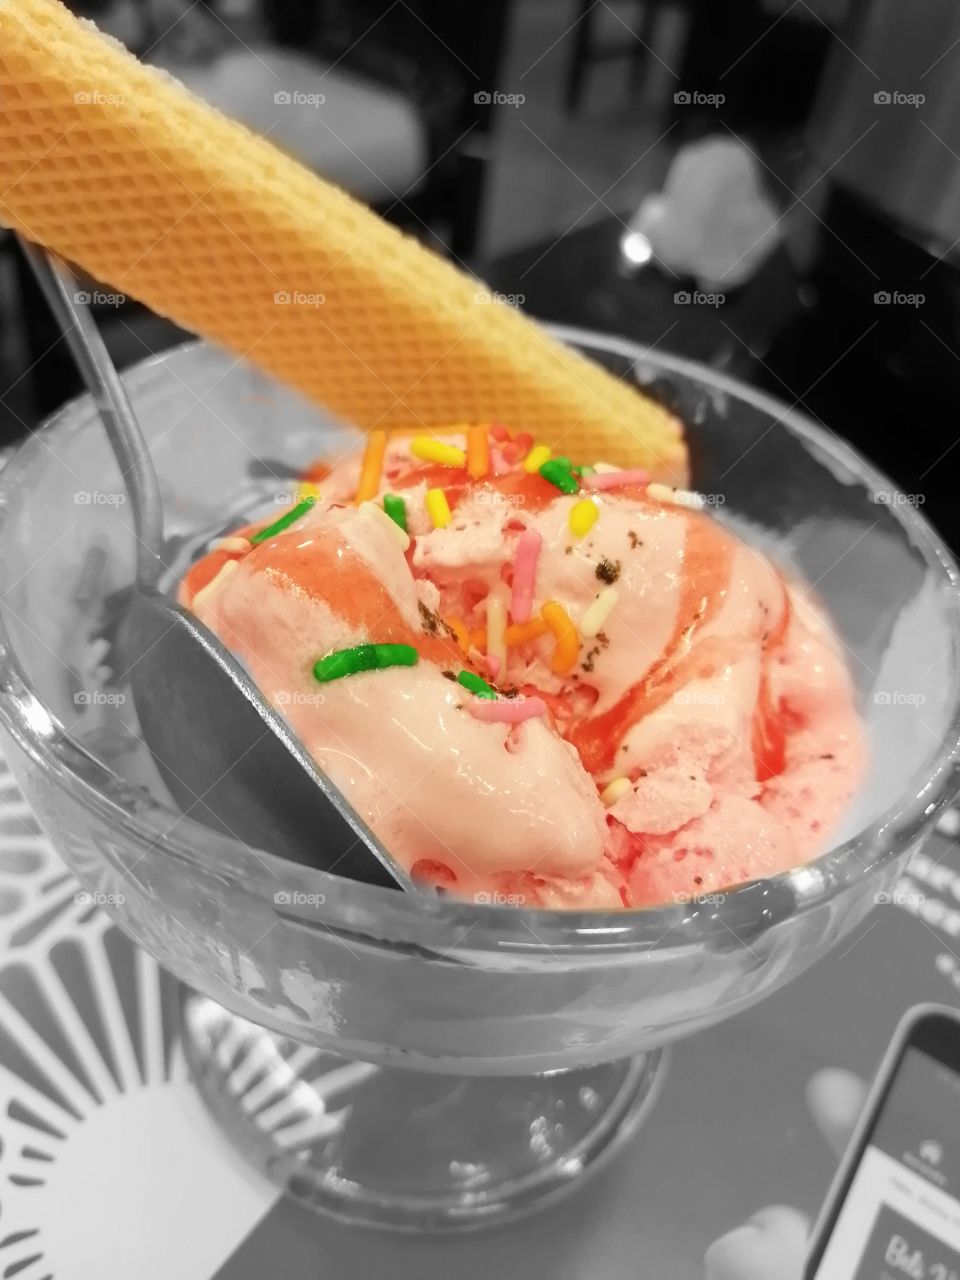 My favorite strawberry ice cream